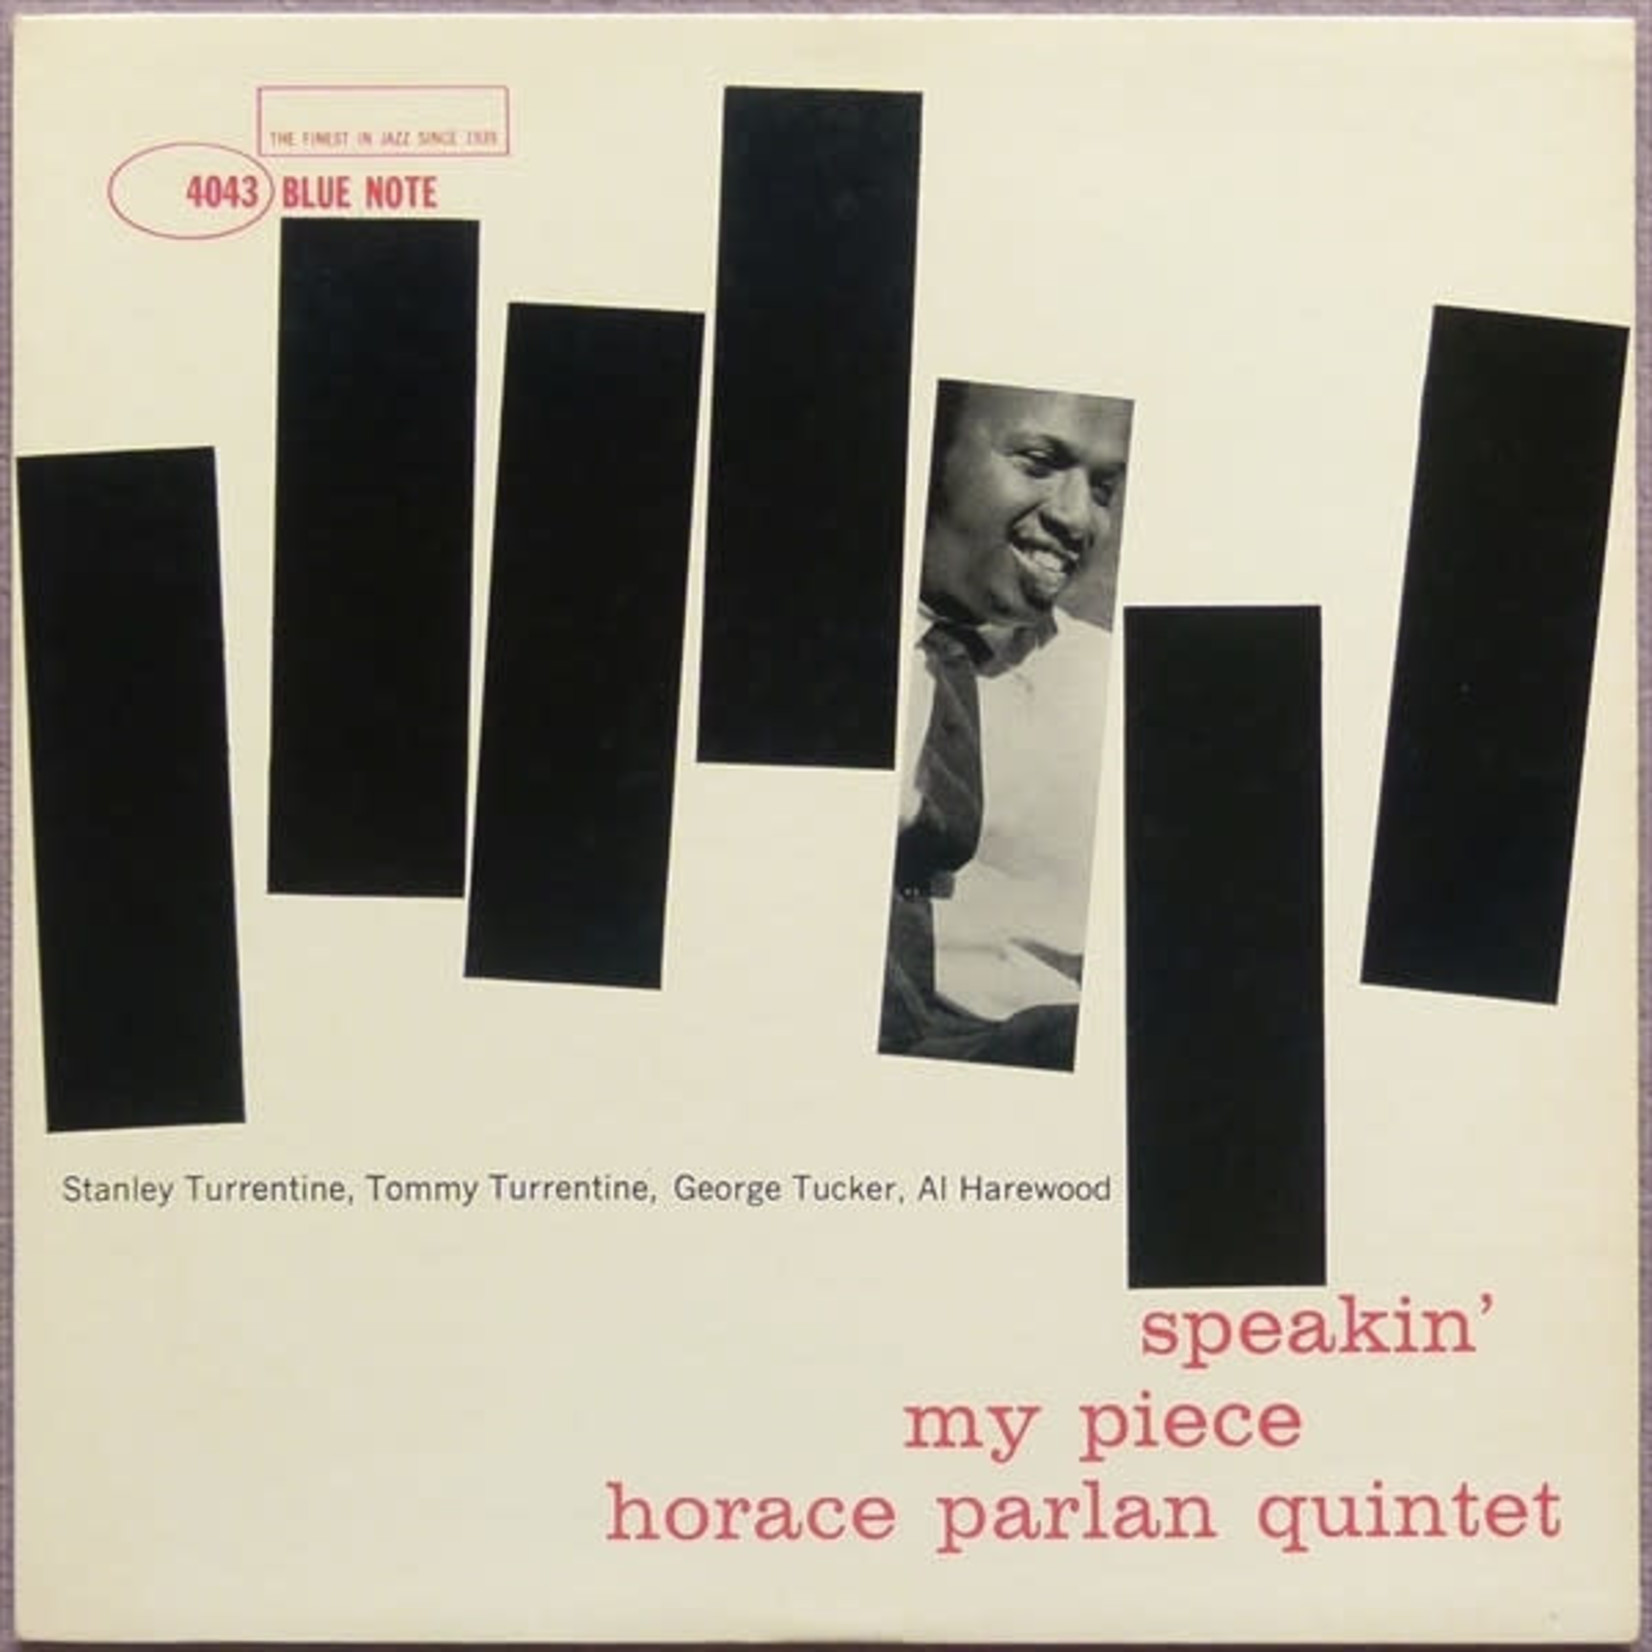 [New] Horace Parlan Quintet - Speakin' My Piece (Blue Note Classic Vinyl series)